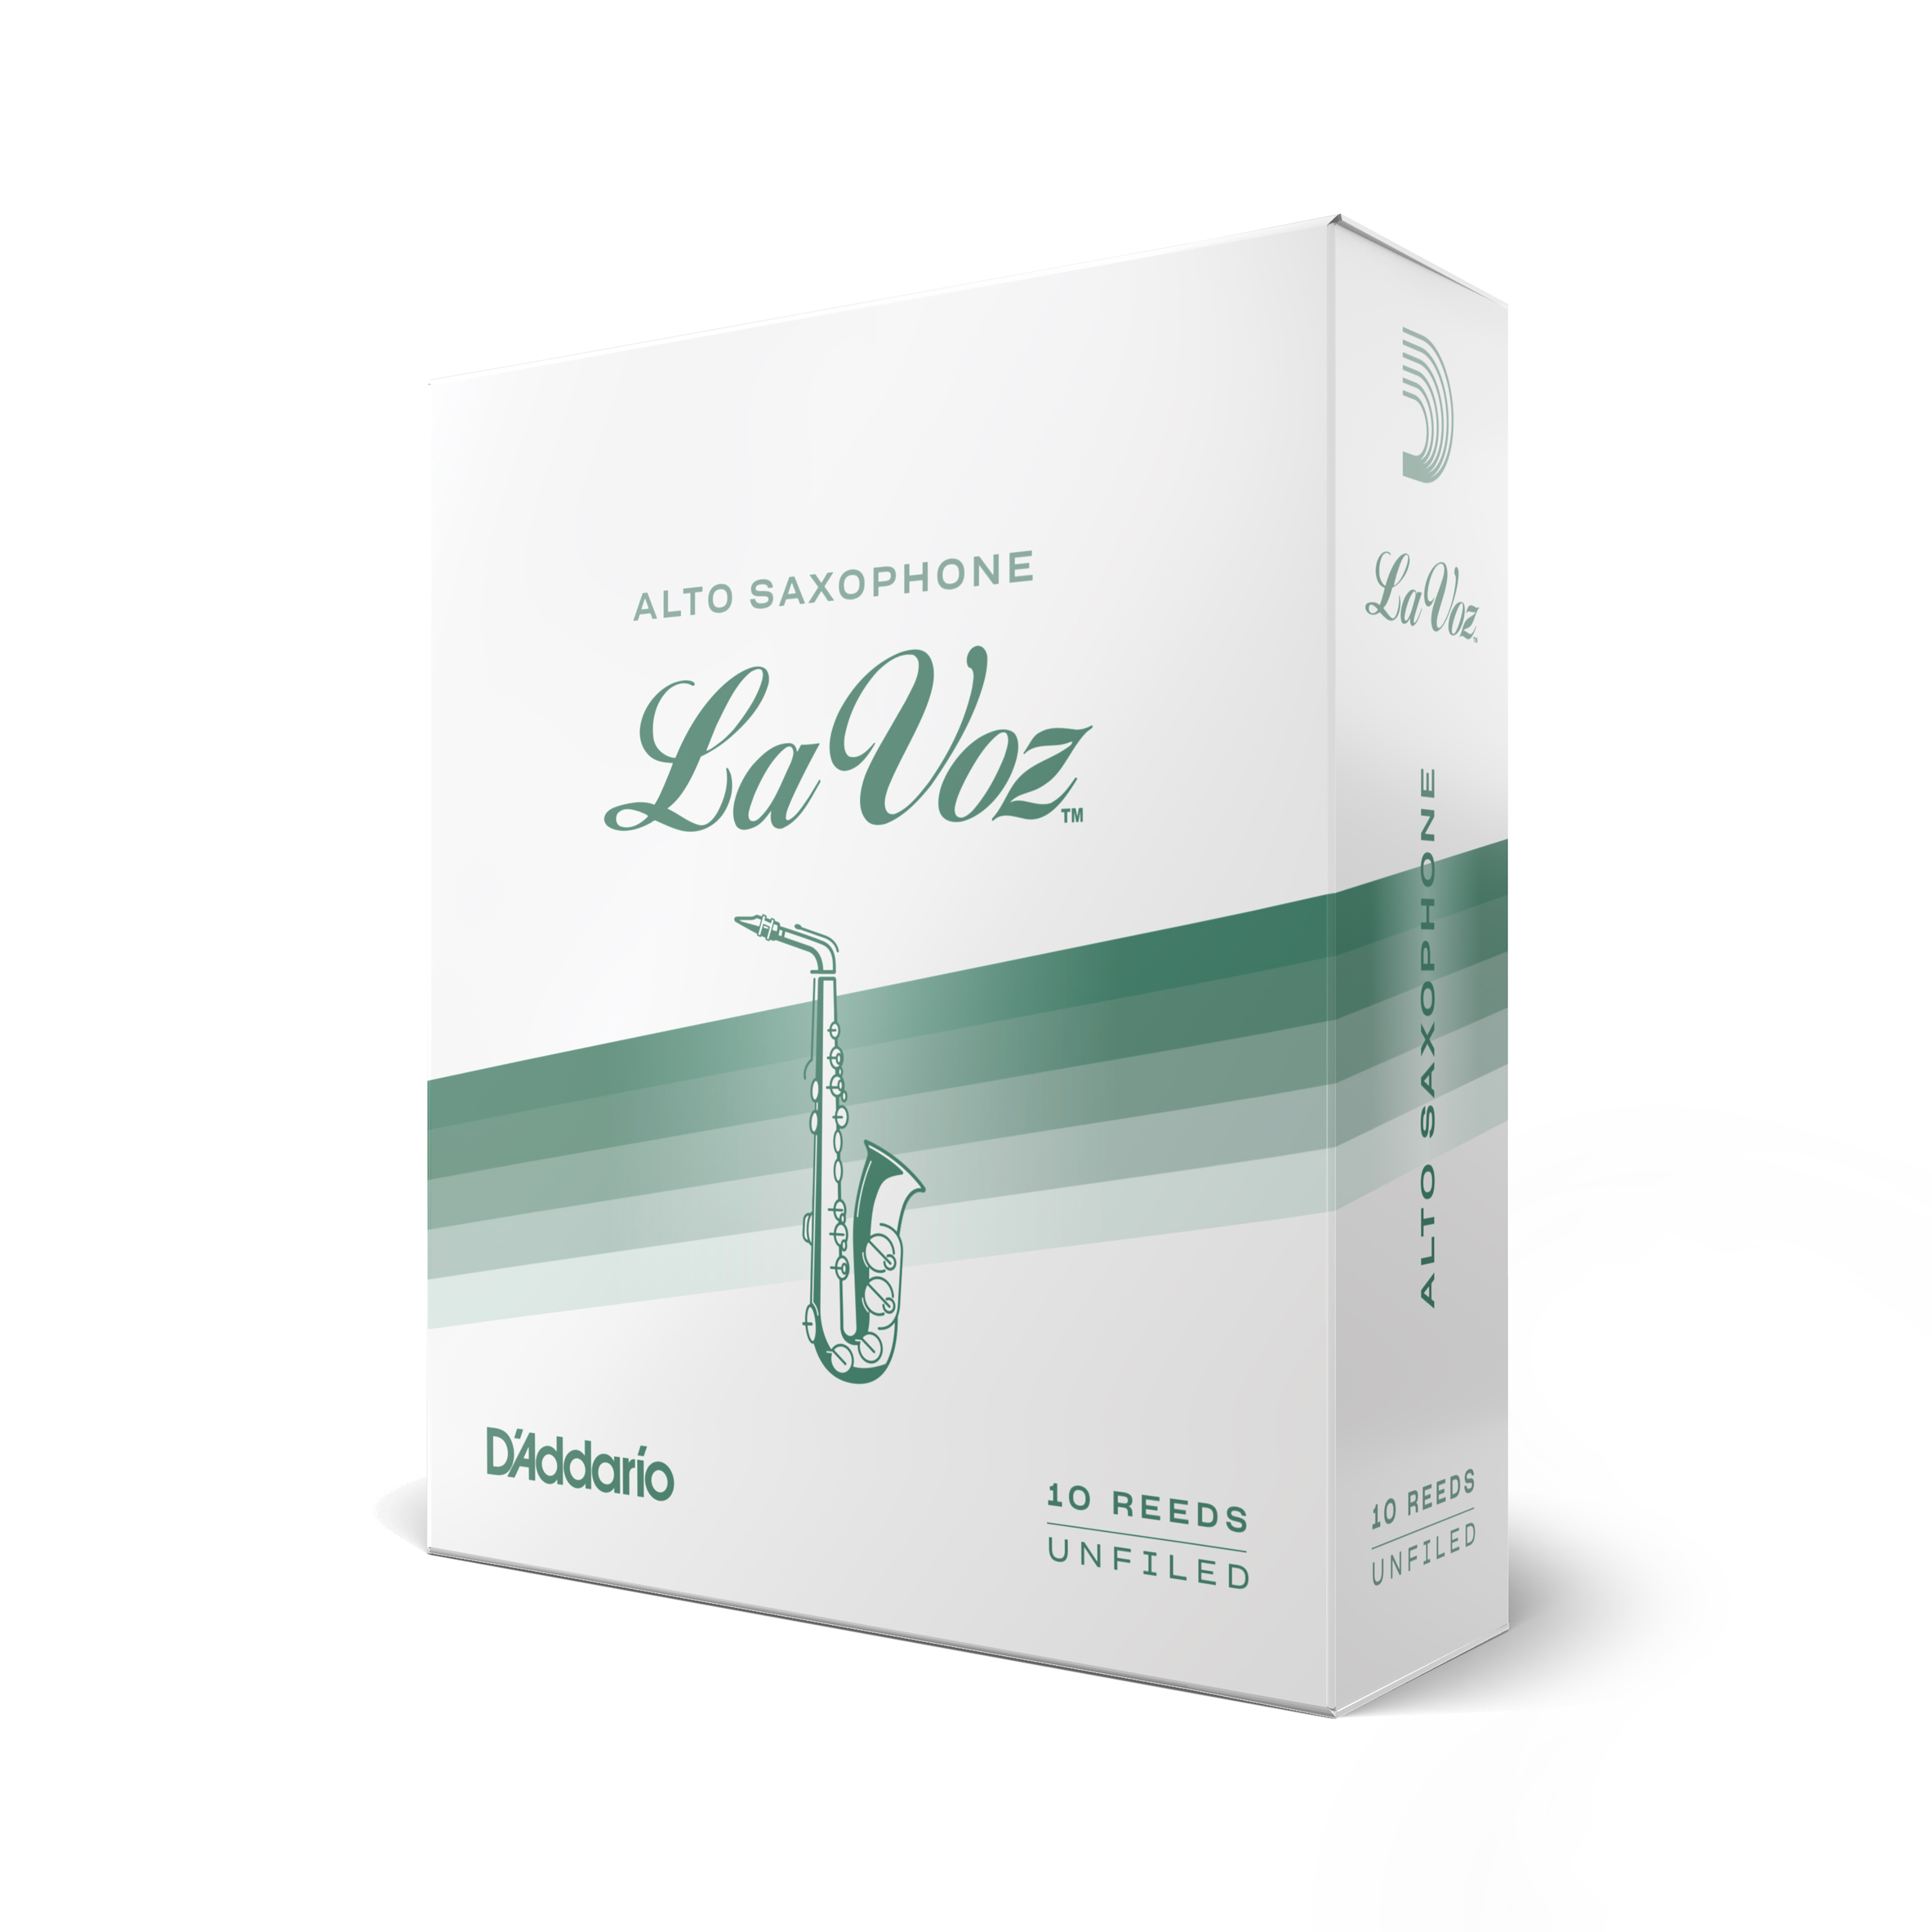 box of ten La Voz by D'addario alto saxophone reeds, medium soft strength